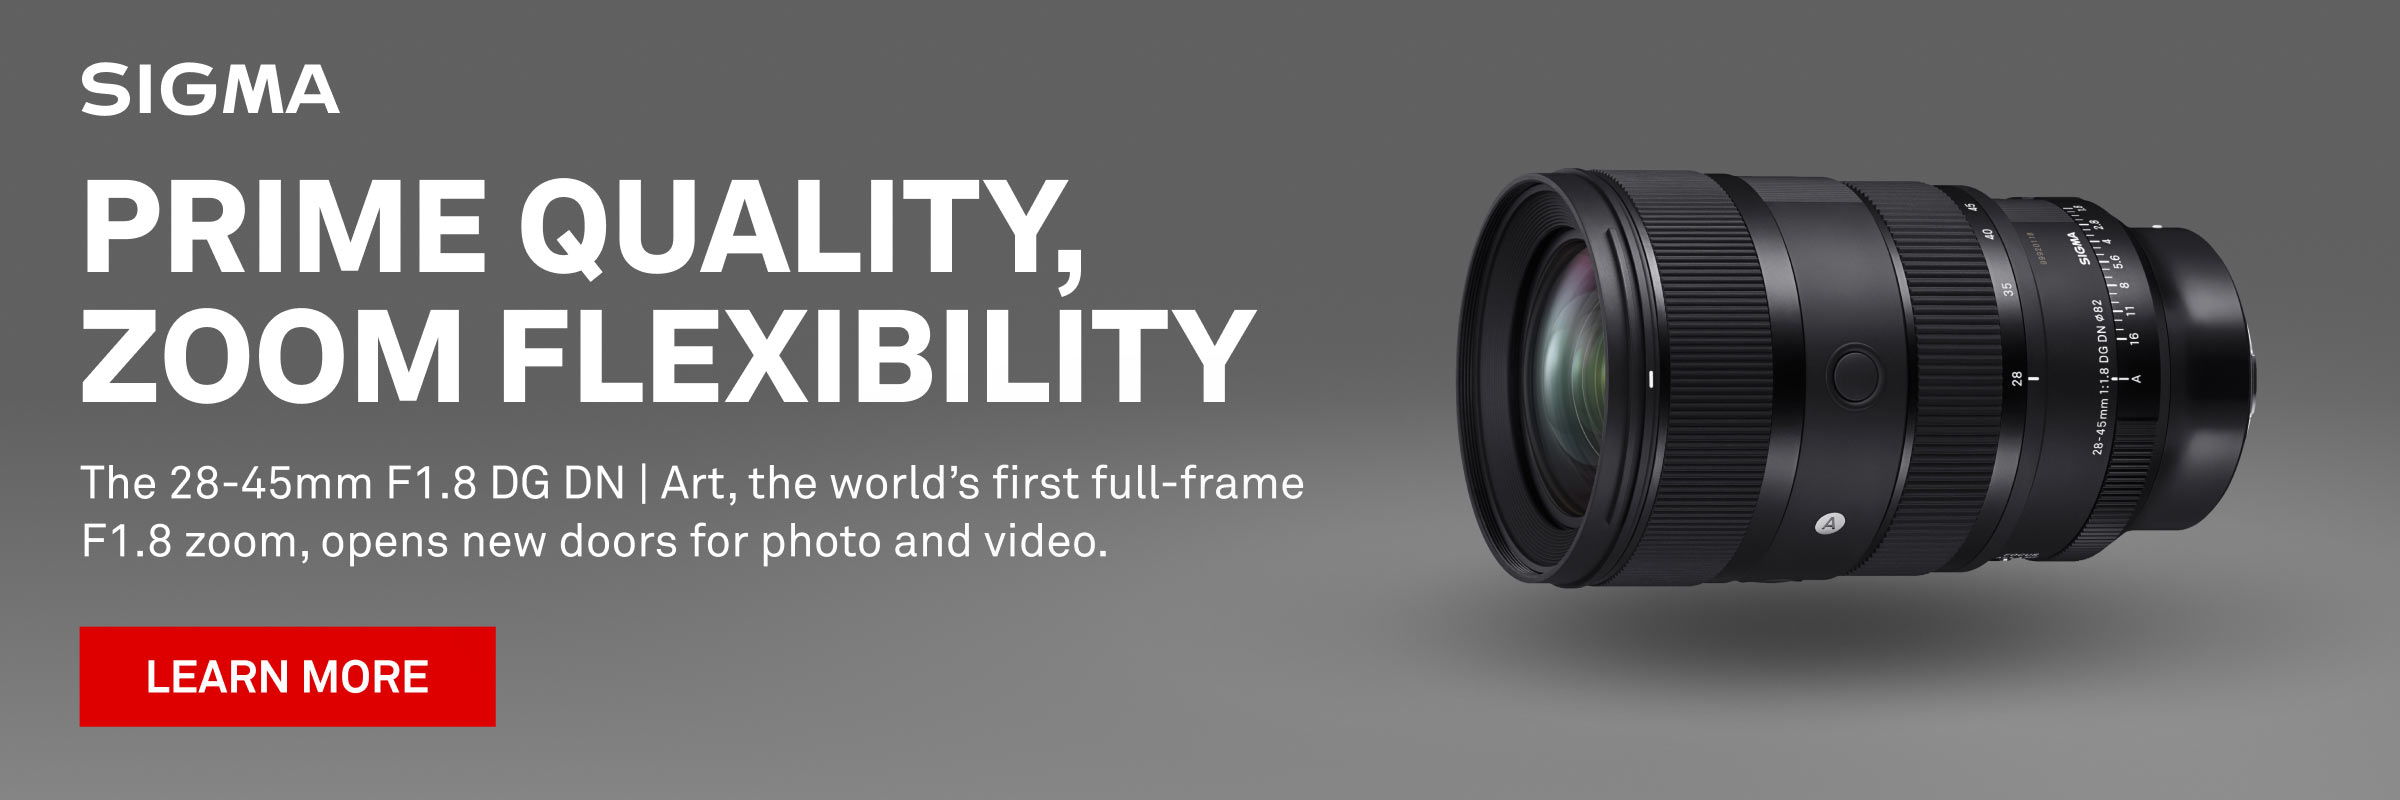 New Sigma 28-45mm Lens